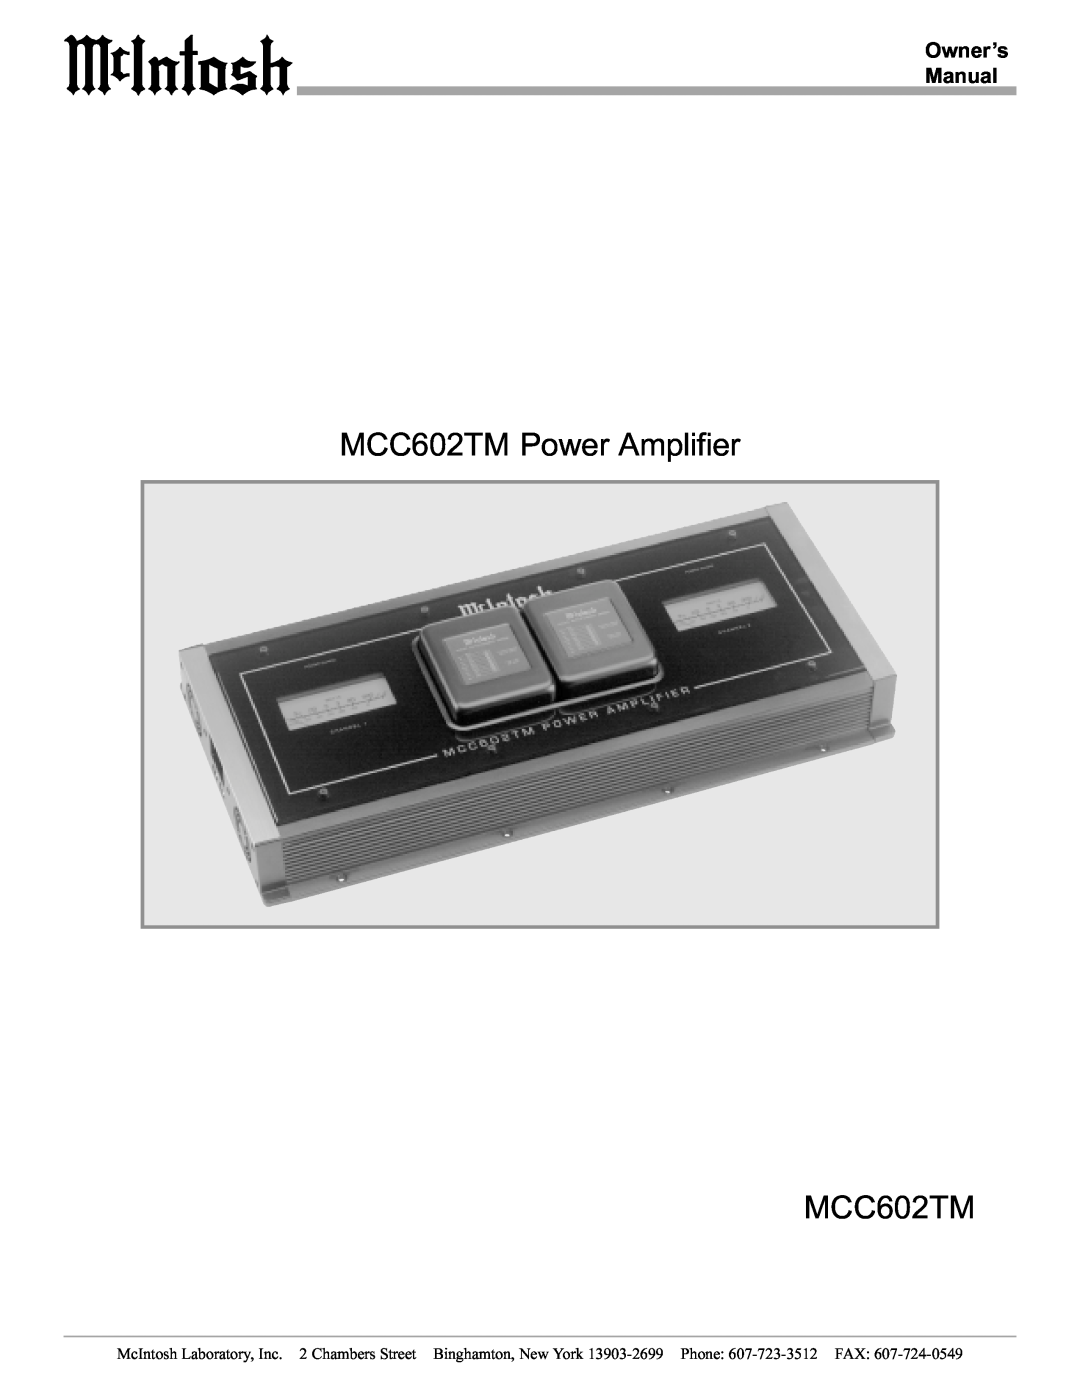 McIntosh manual MCC602TM Power Amplifier MCC602TM 